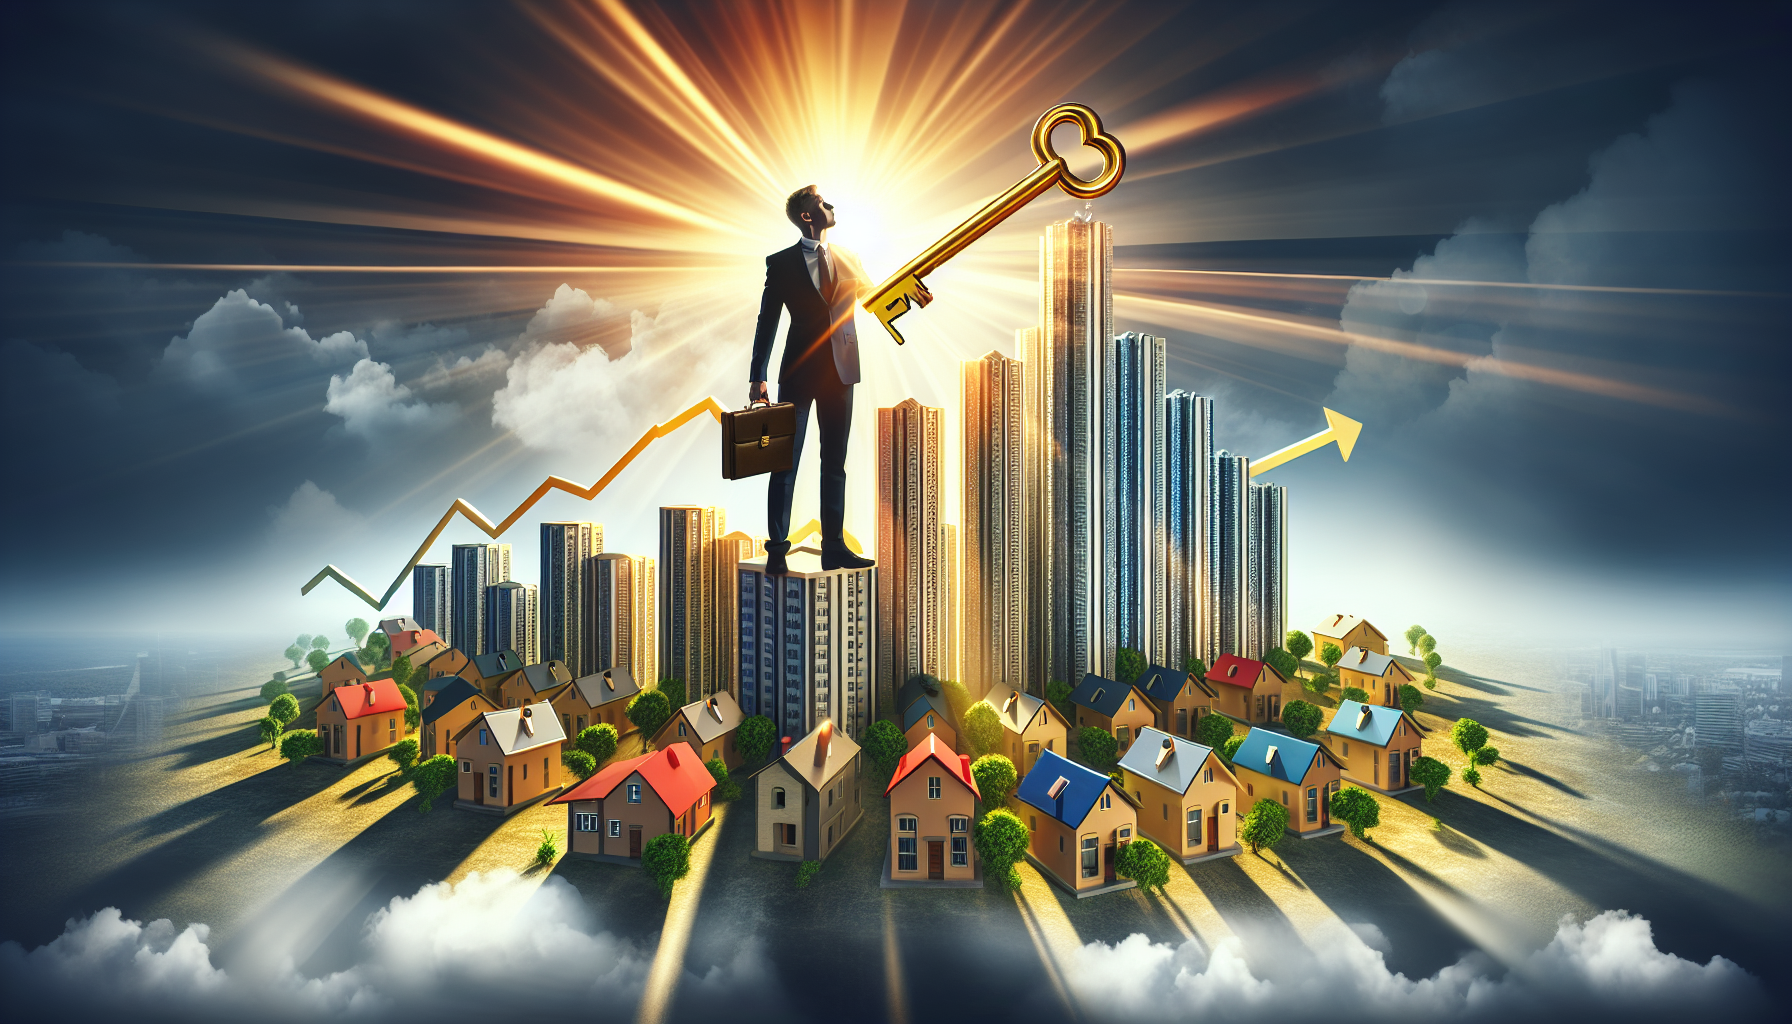 Illustration of real estate investor expanding portfolio with DSCR loans